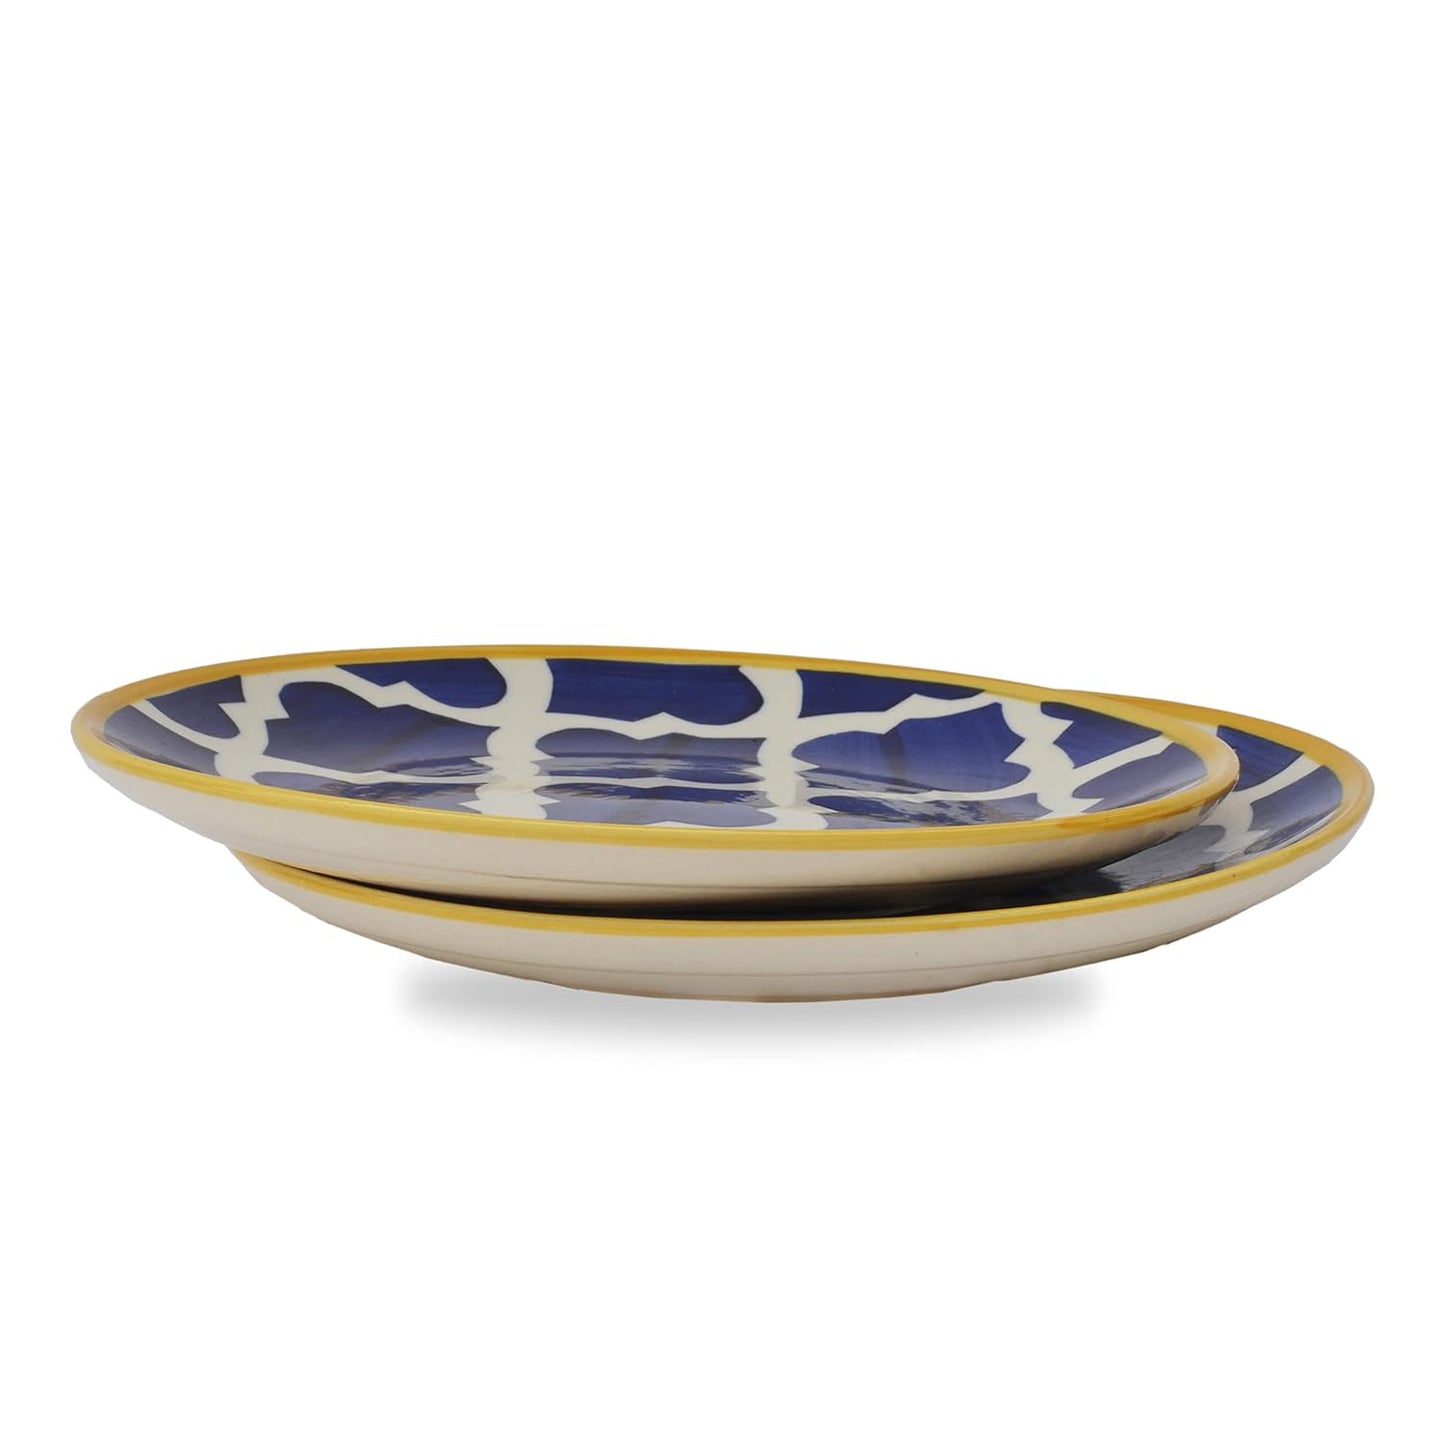 Blue Moroccan Ceramic Dinner Plates - Set of 2